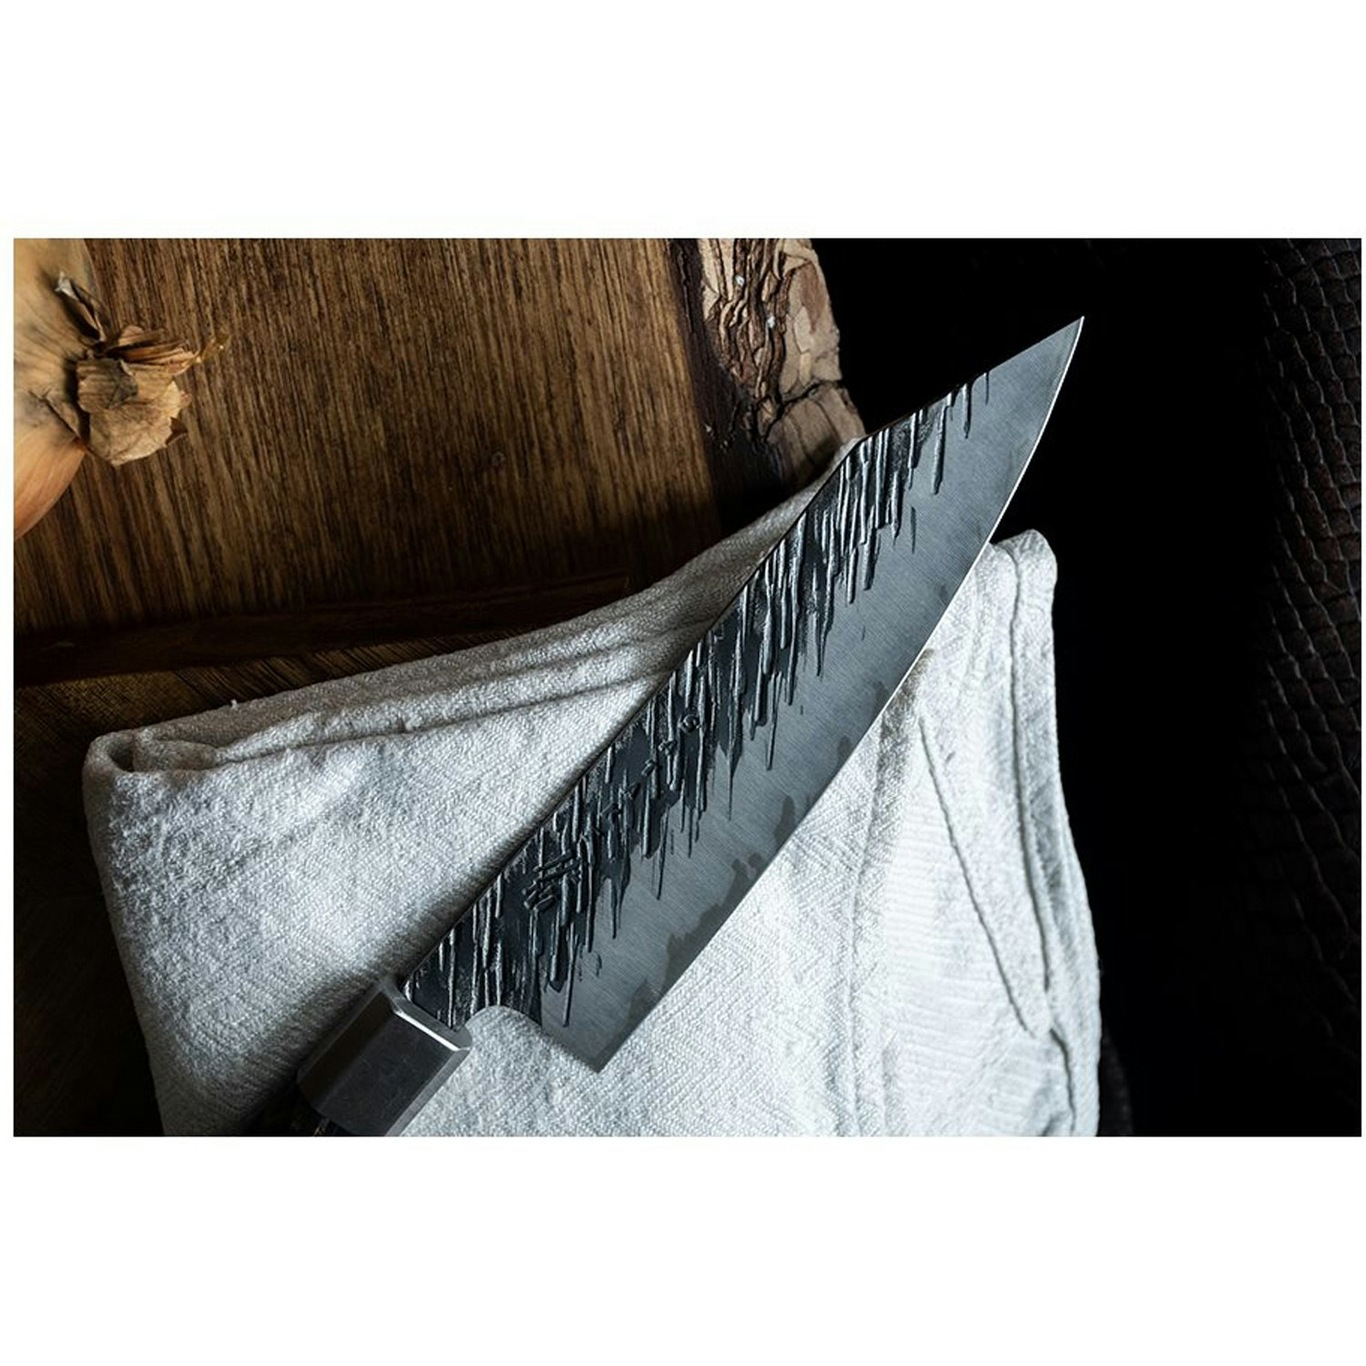 https://royaldesign.com/image/2/satake-ame-bunka-japanese-chef-knife-15-cm-6?w=800&quality=80